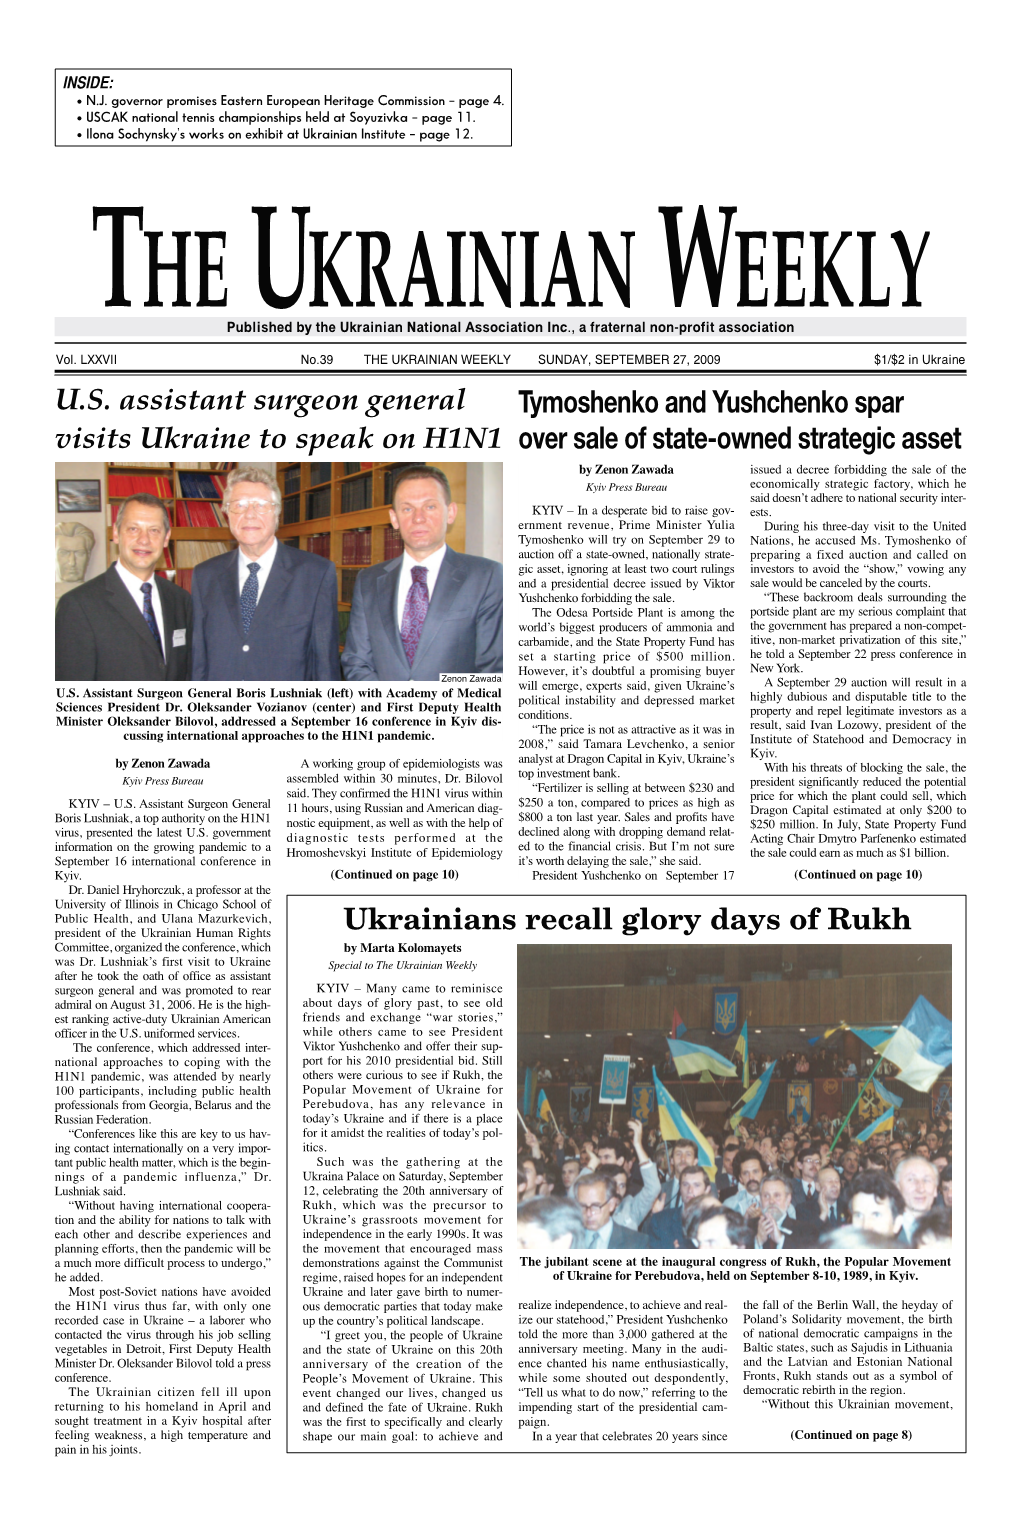 The Ukrainian Weekly 2009, No.39